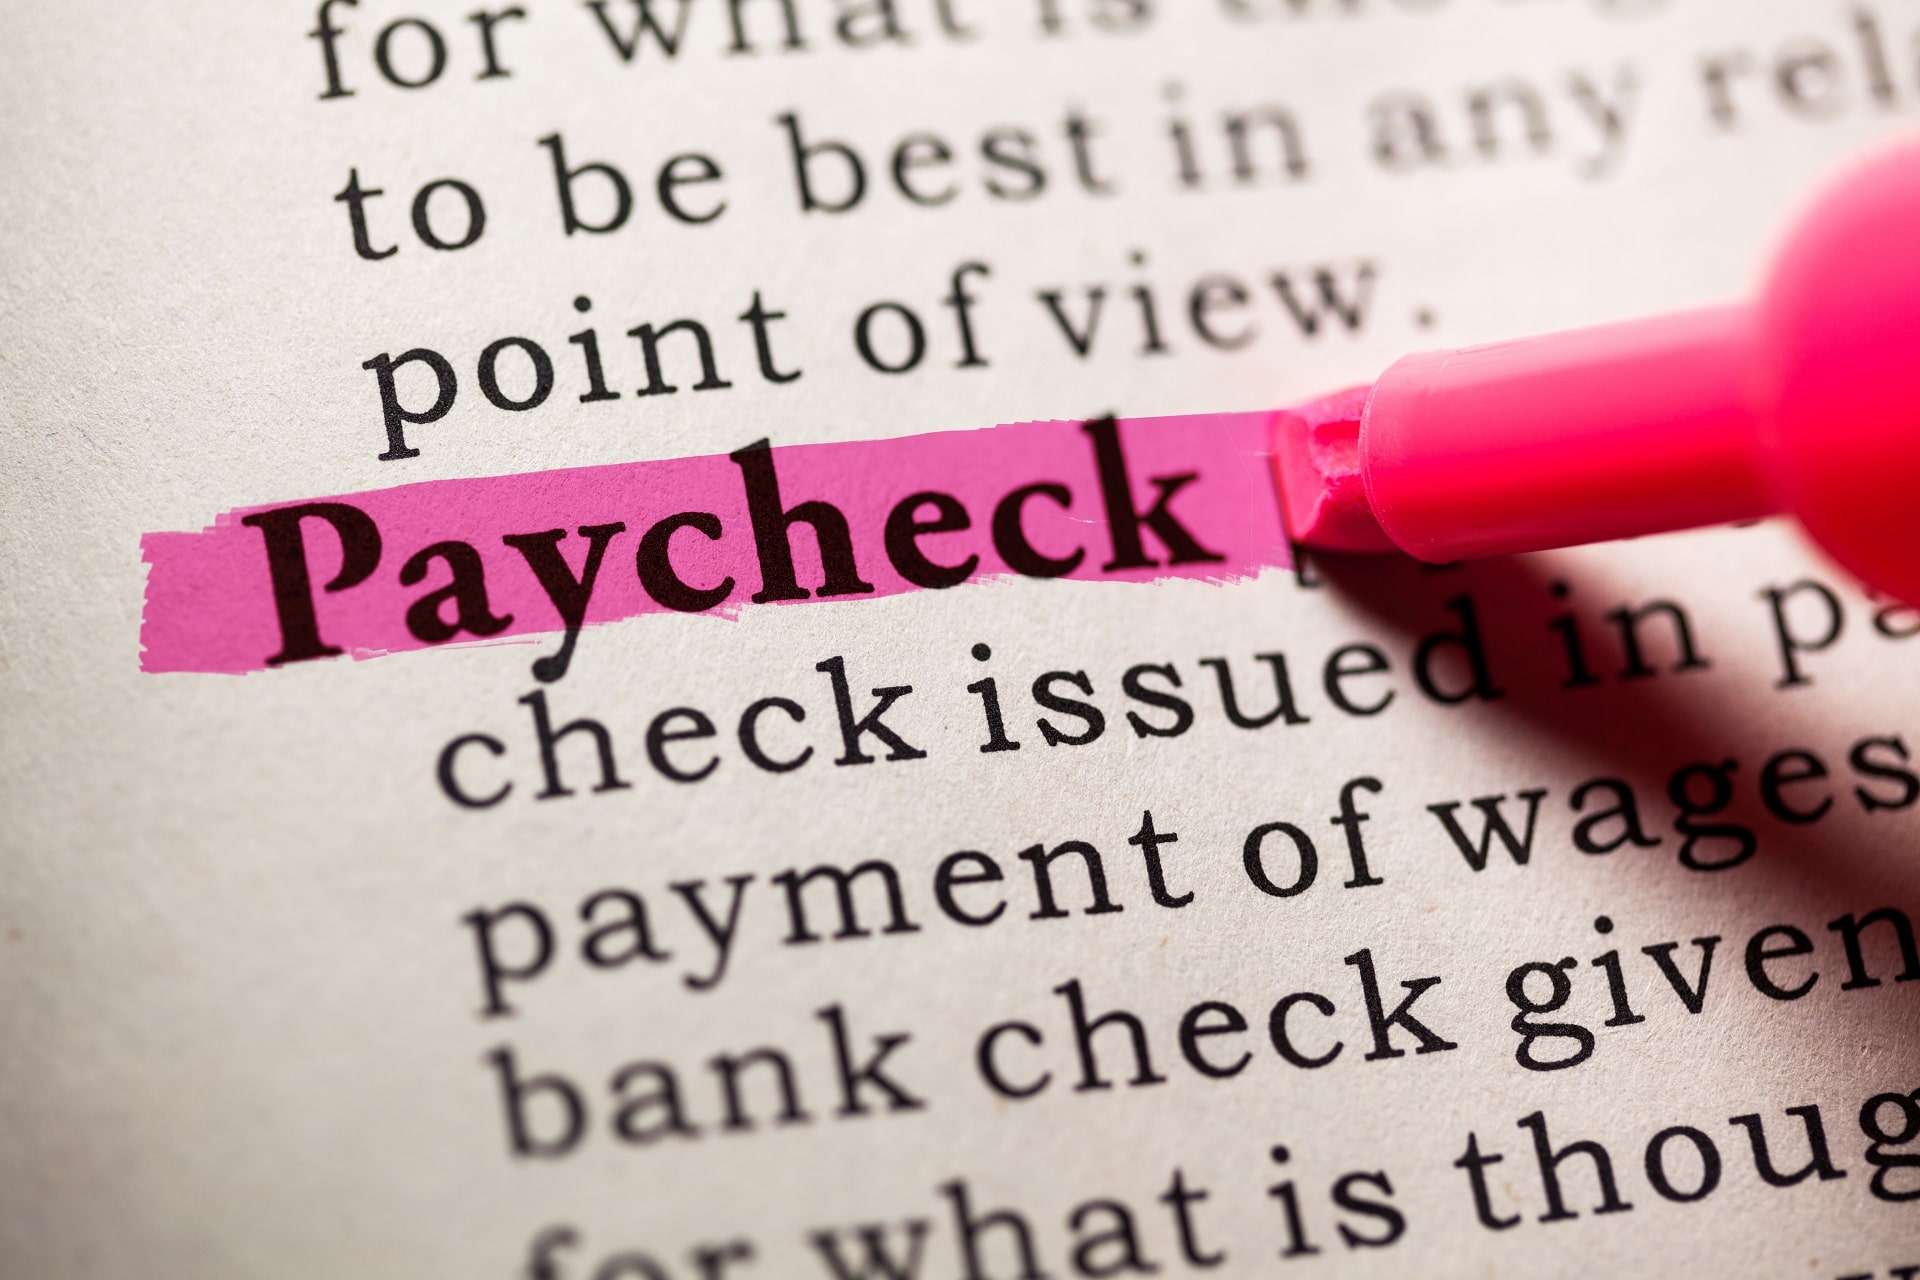 paycheck protection program